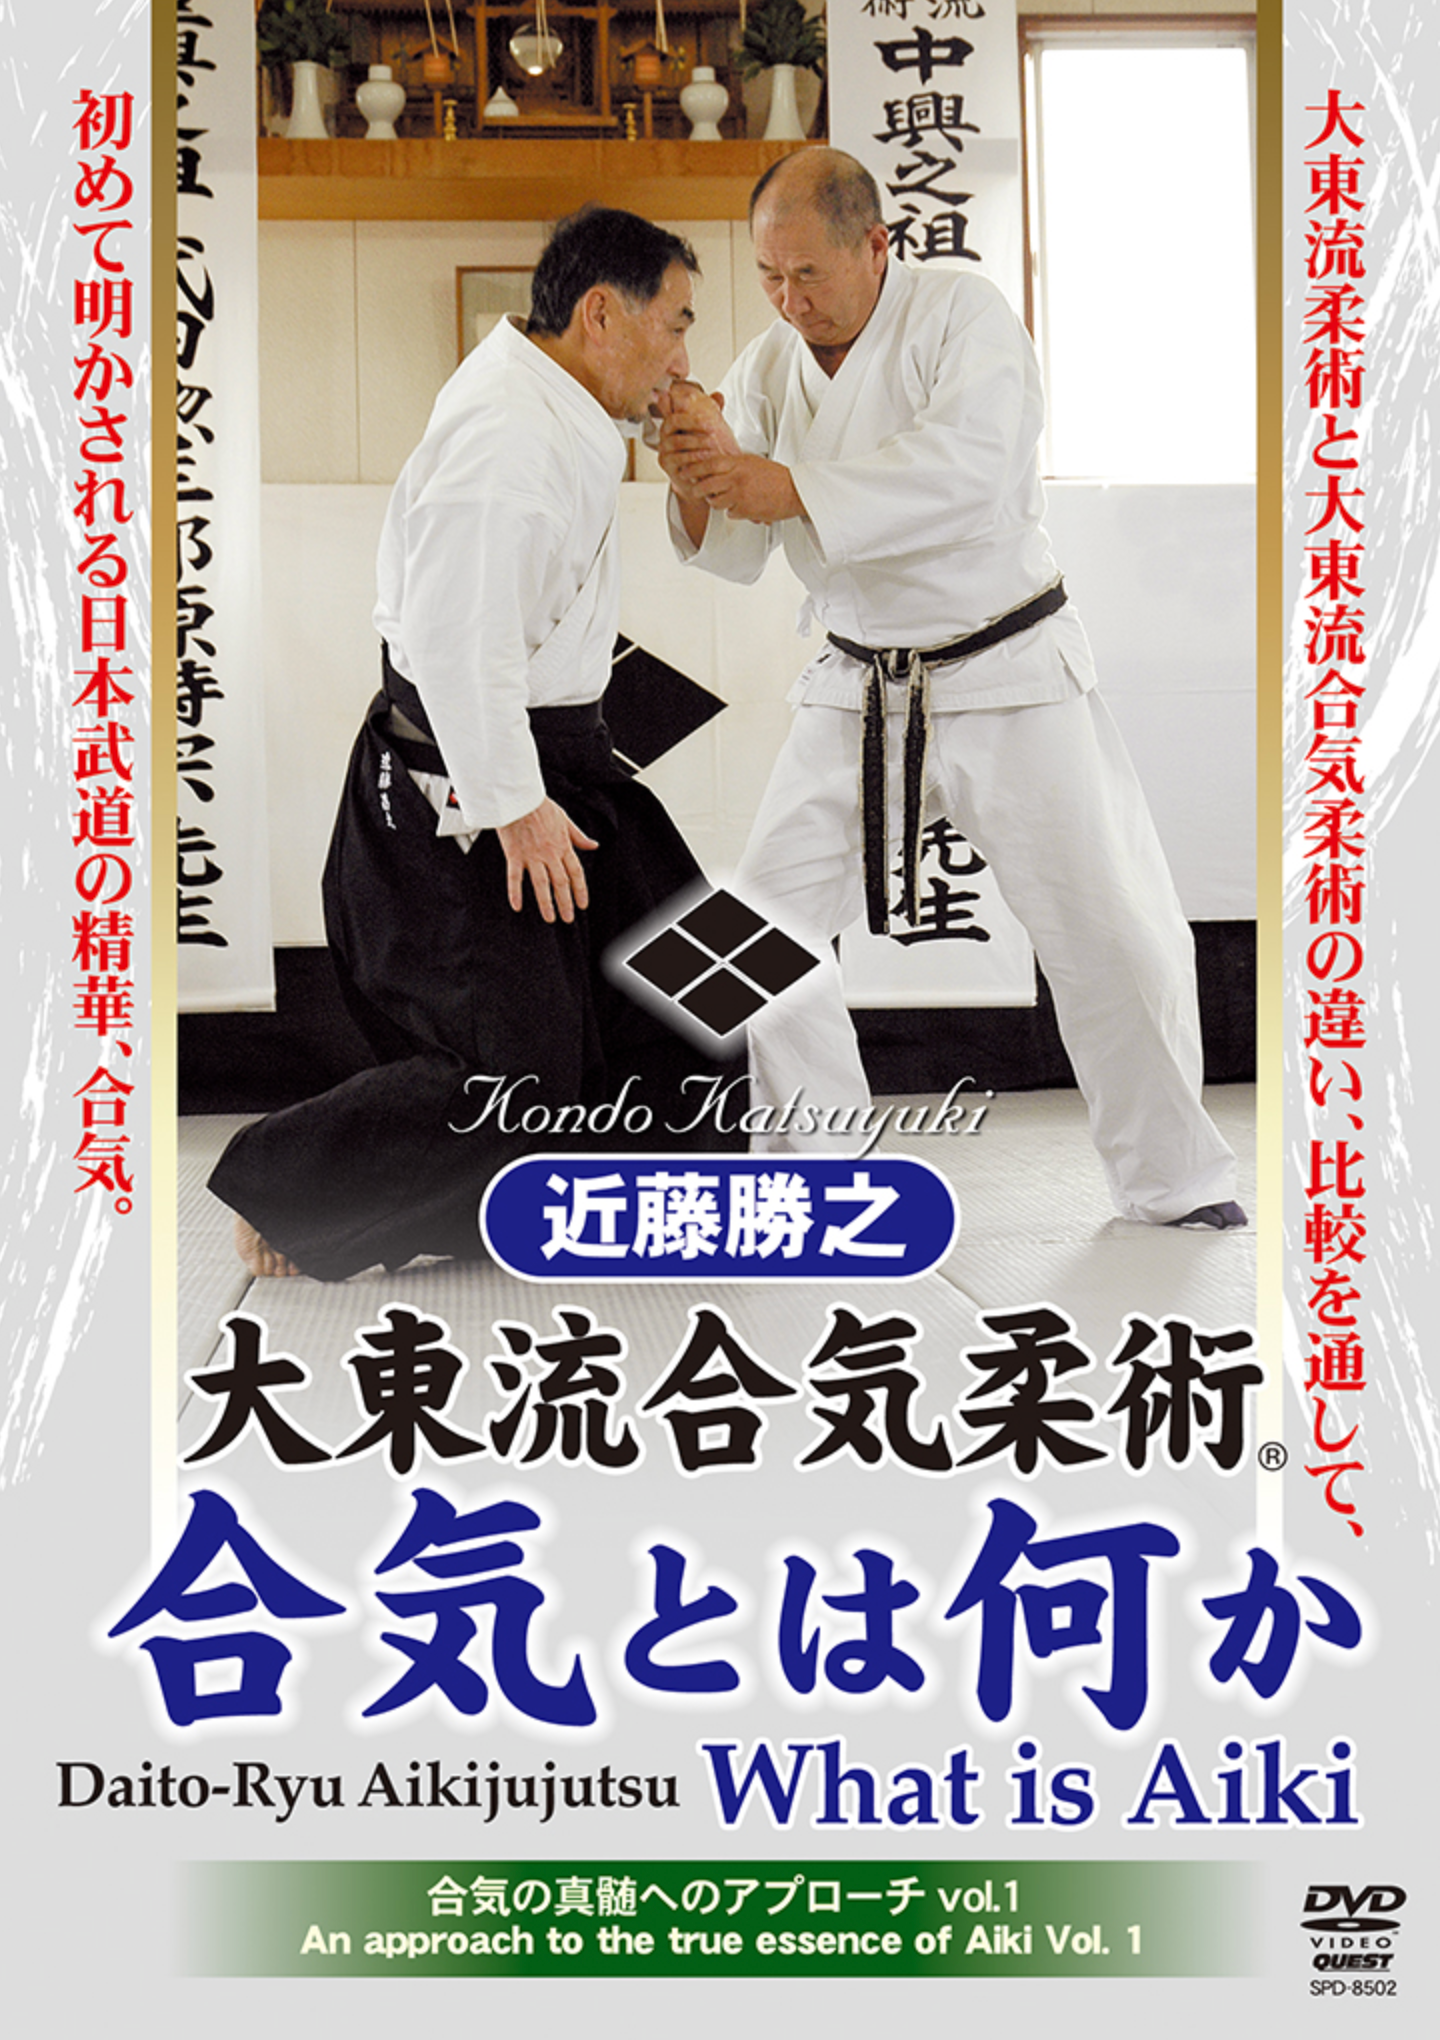 Daito Ryu Aikijujutusu: What is Aiki? DVD with Katsuyuki Kondo - Budovideos Inc